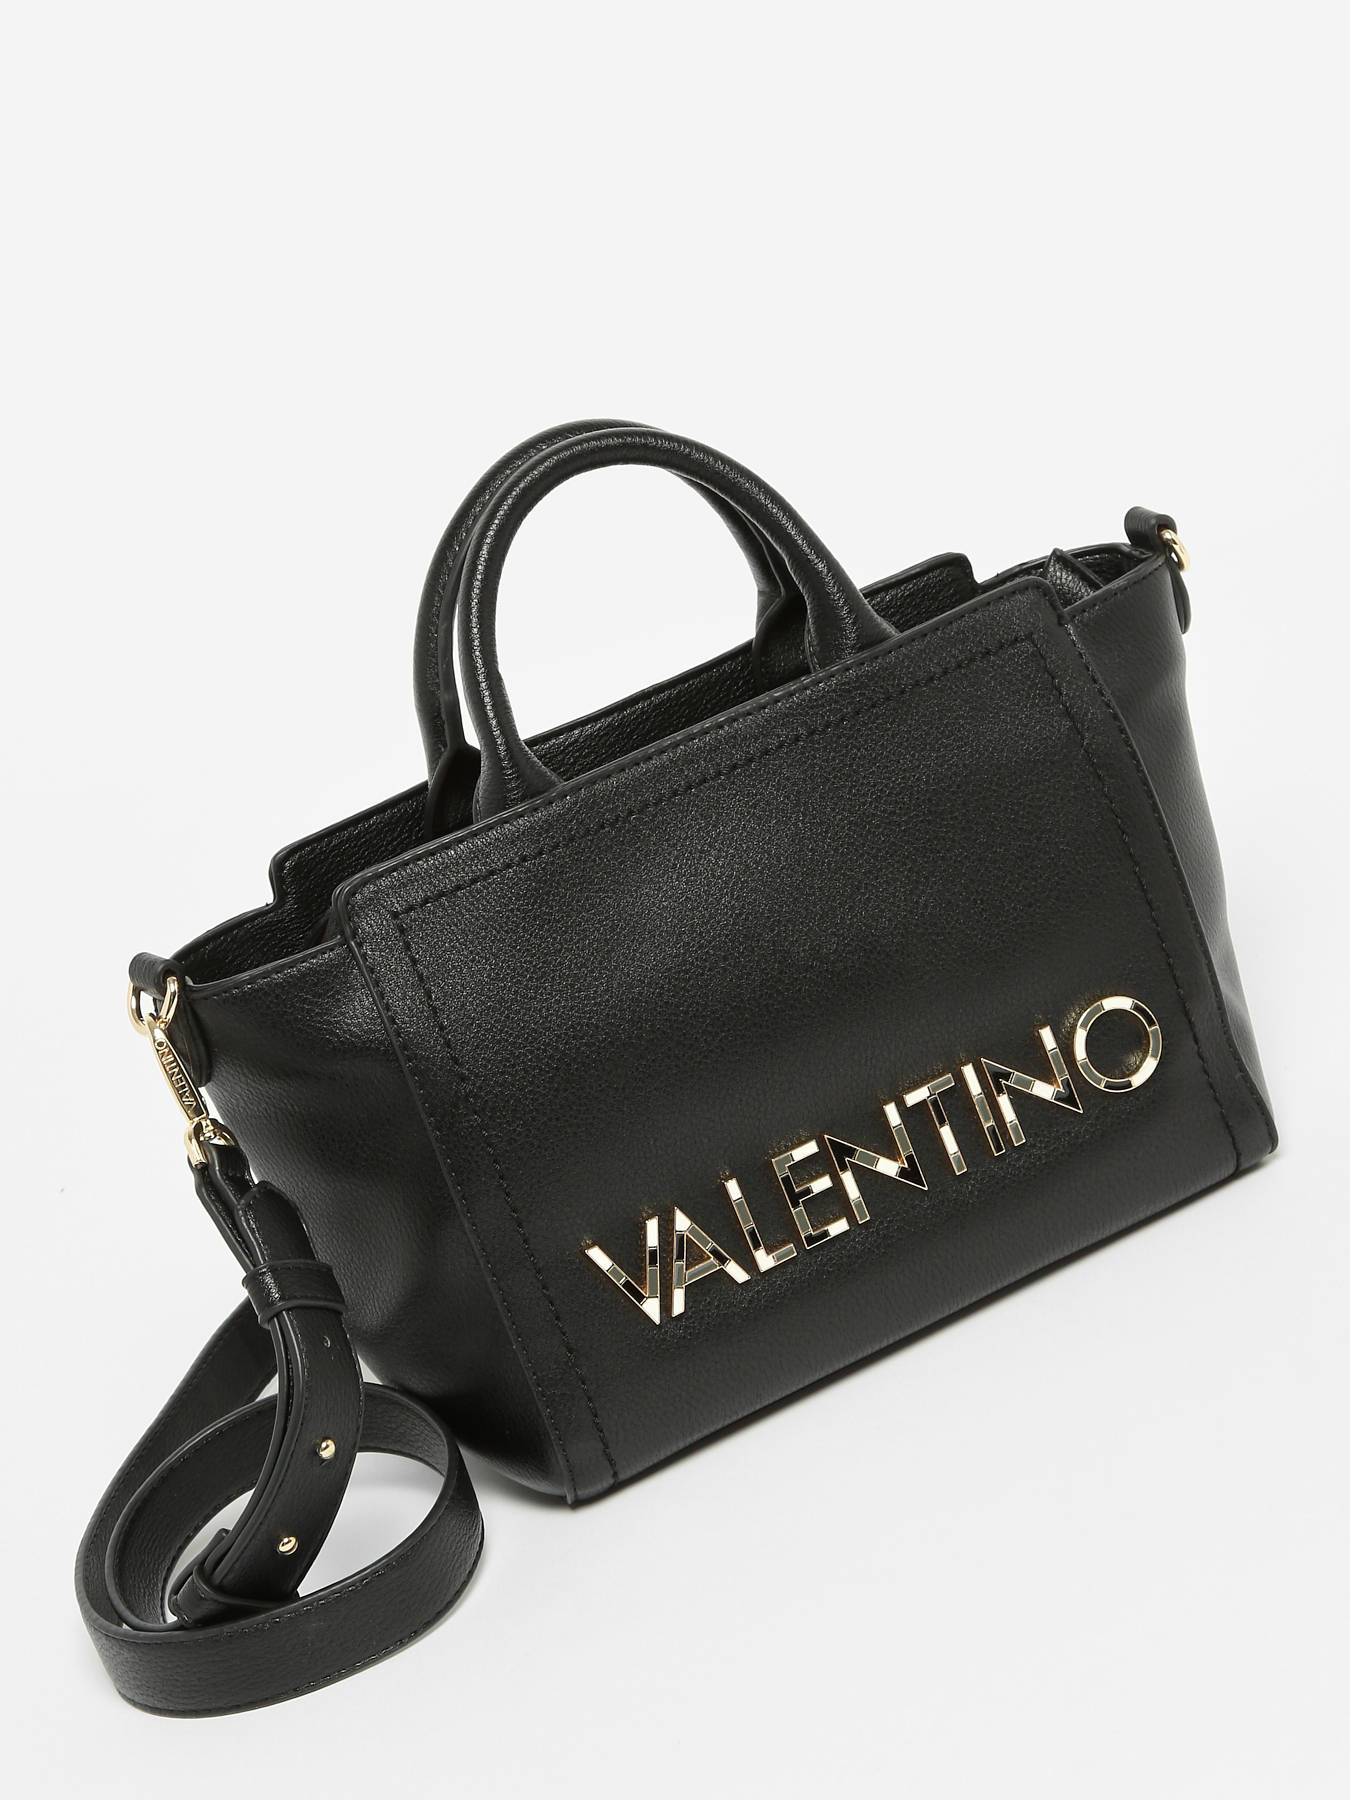 Valentino VBS7AY03 - prices